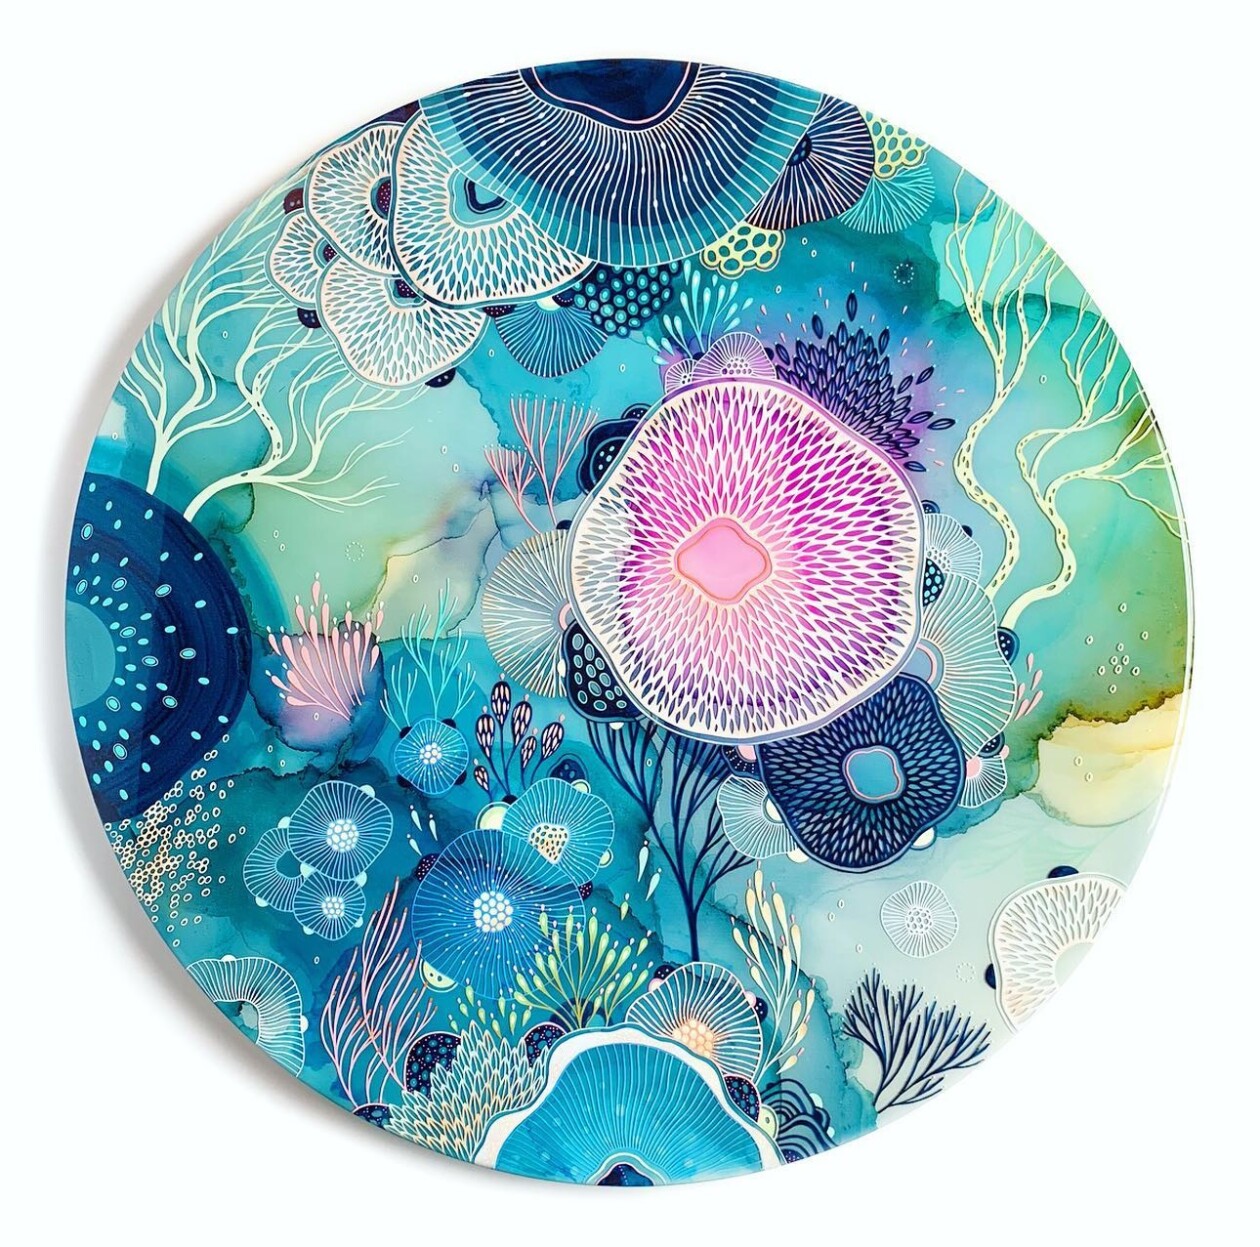 Flaring Mixed Media Paintings Of Dreamy Aquatic Ecosystems By Yellena James (12)